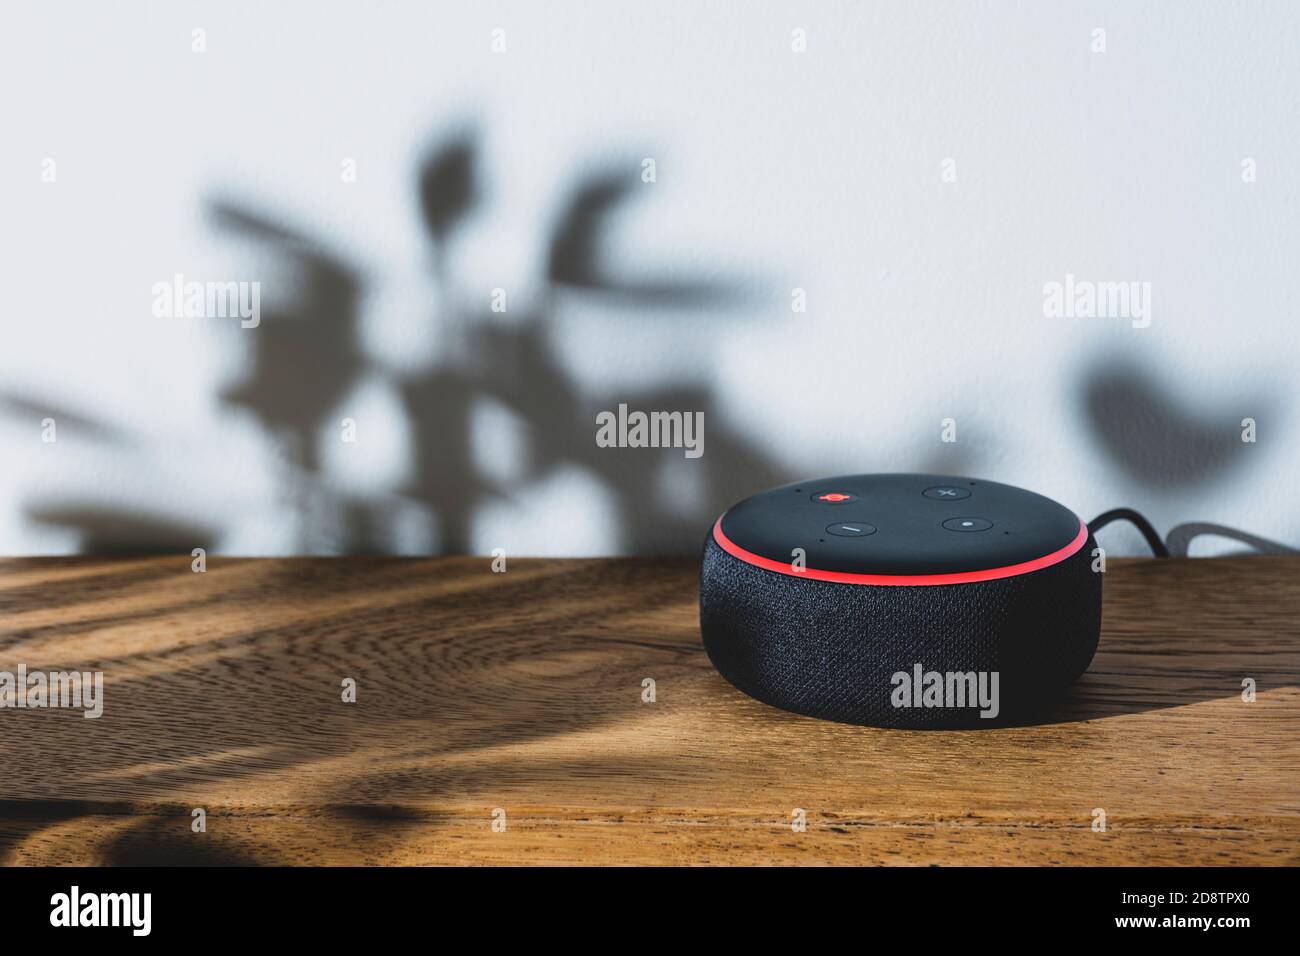 Altavoz inteligente Amazon Echo Dot con la luz roja Mute encendida. Foto de stock